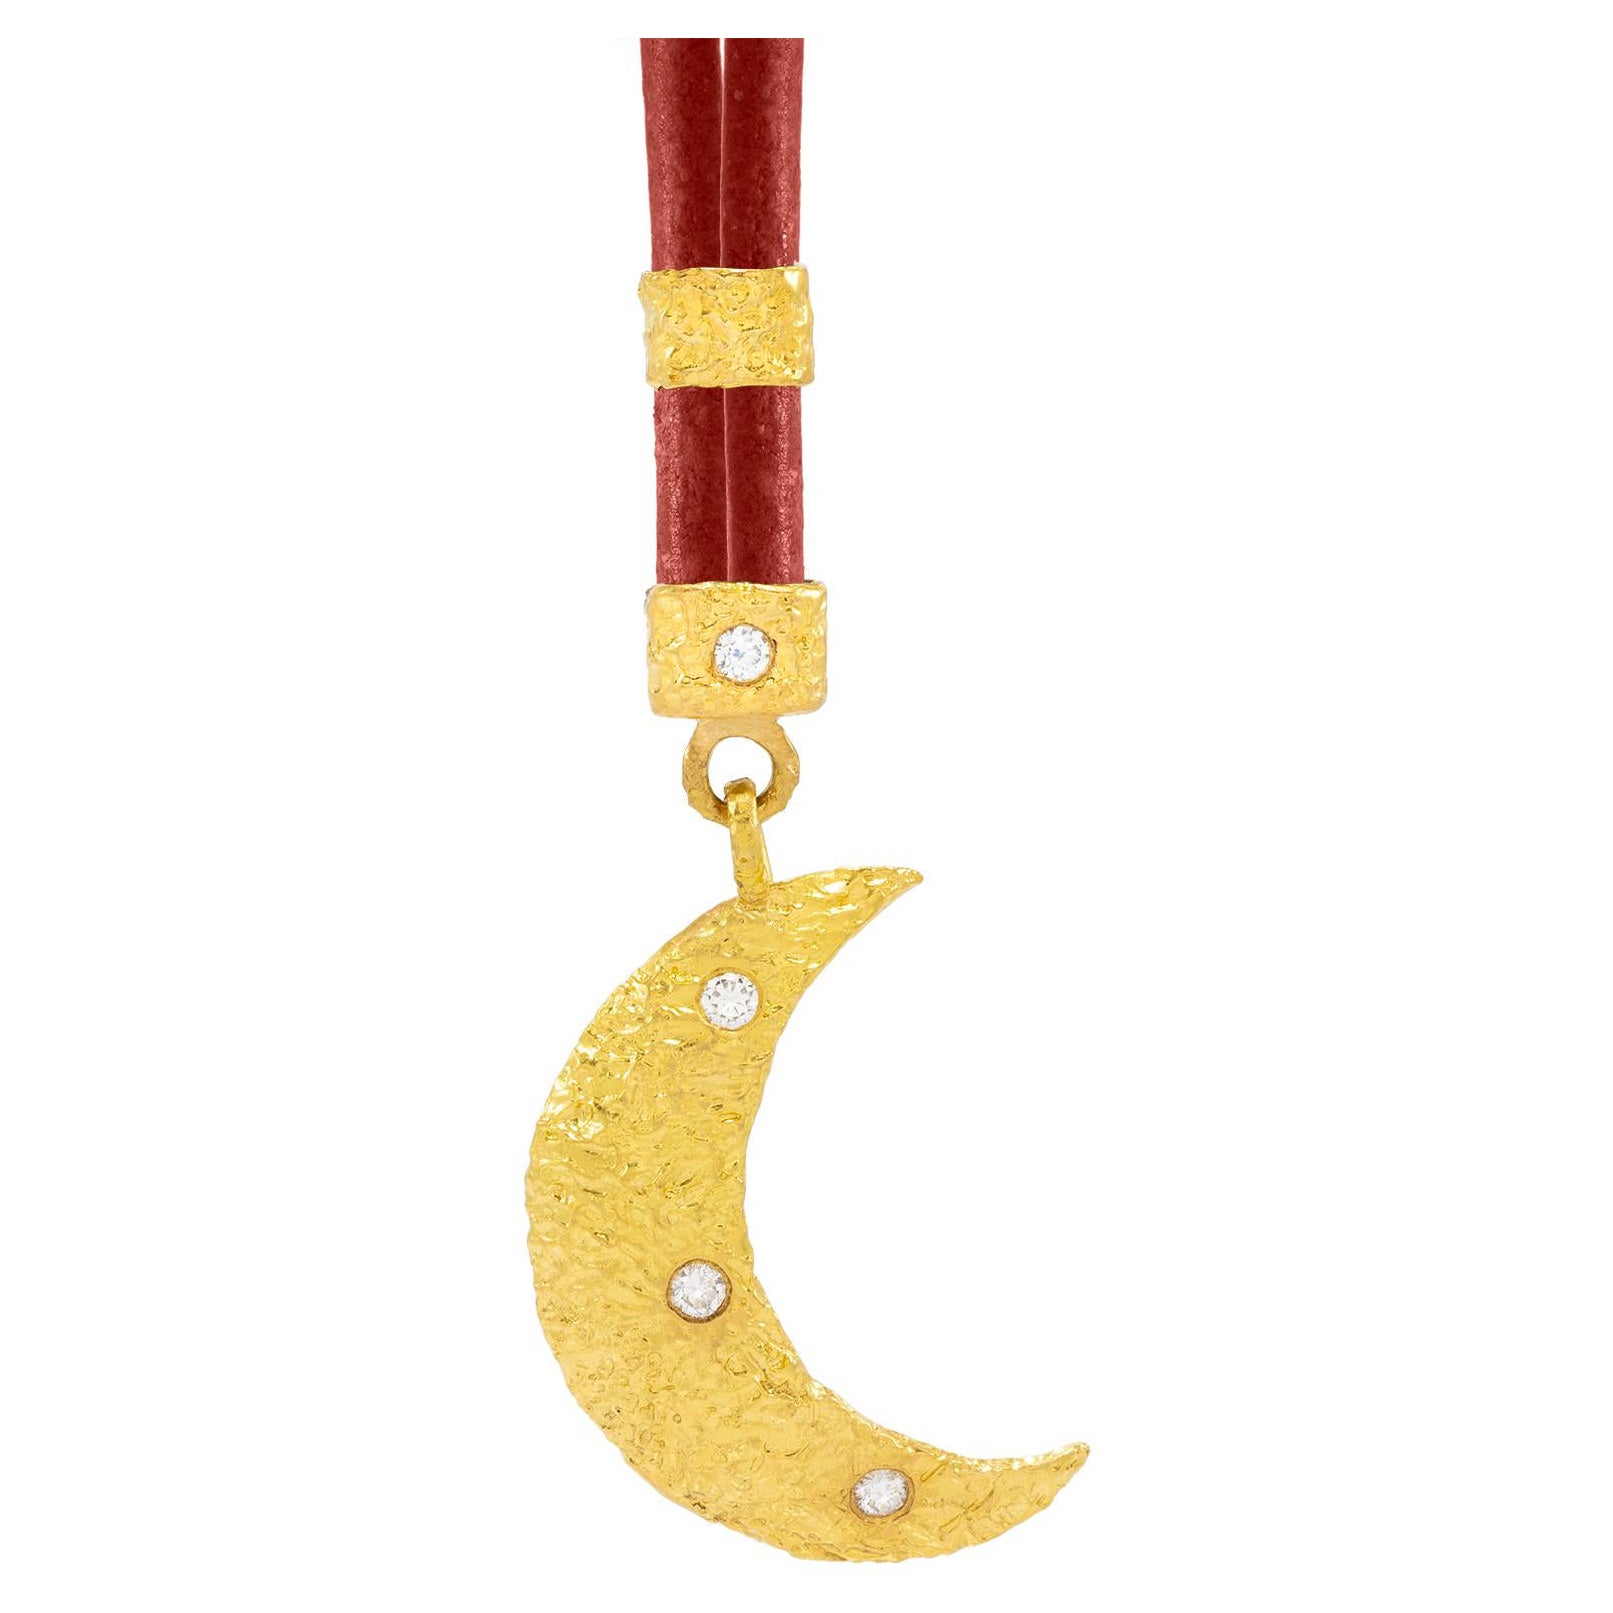 Pendentif de lune croissante Allegra en or 22 carats, par Tagili